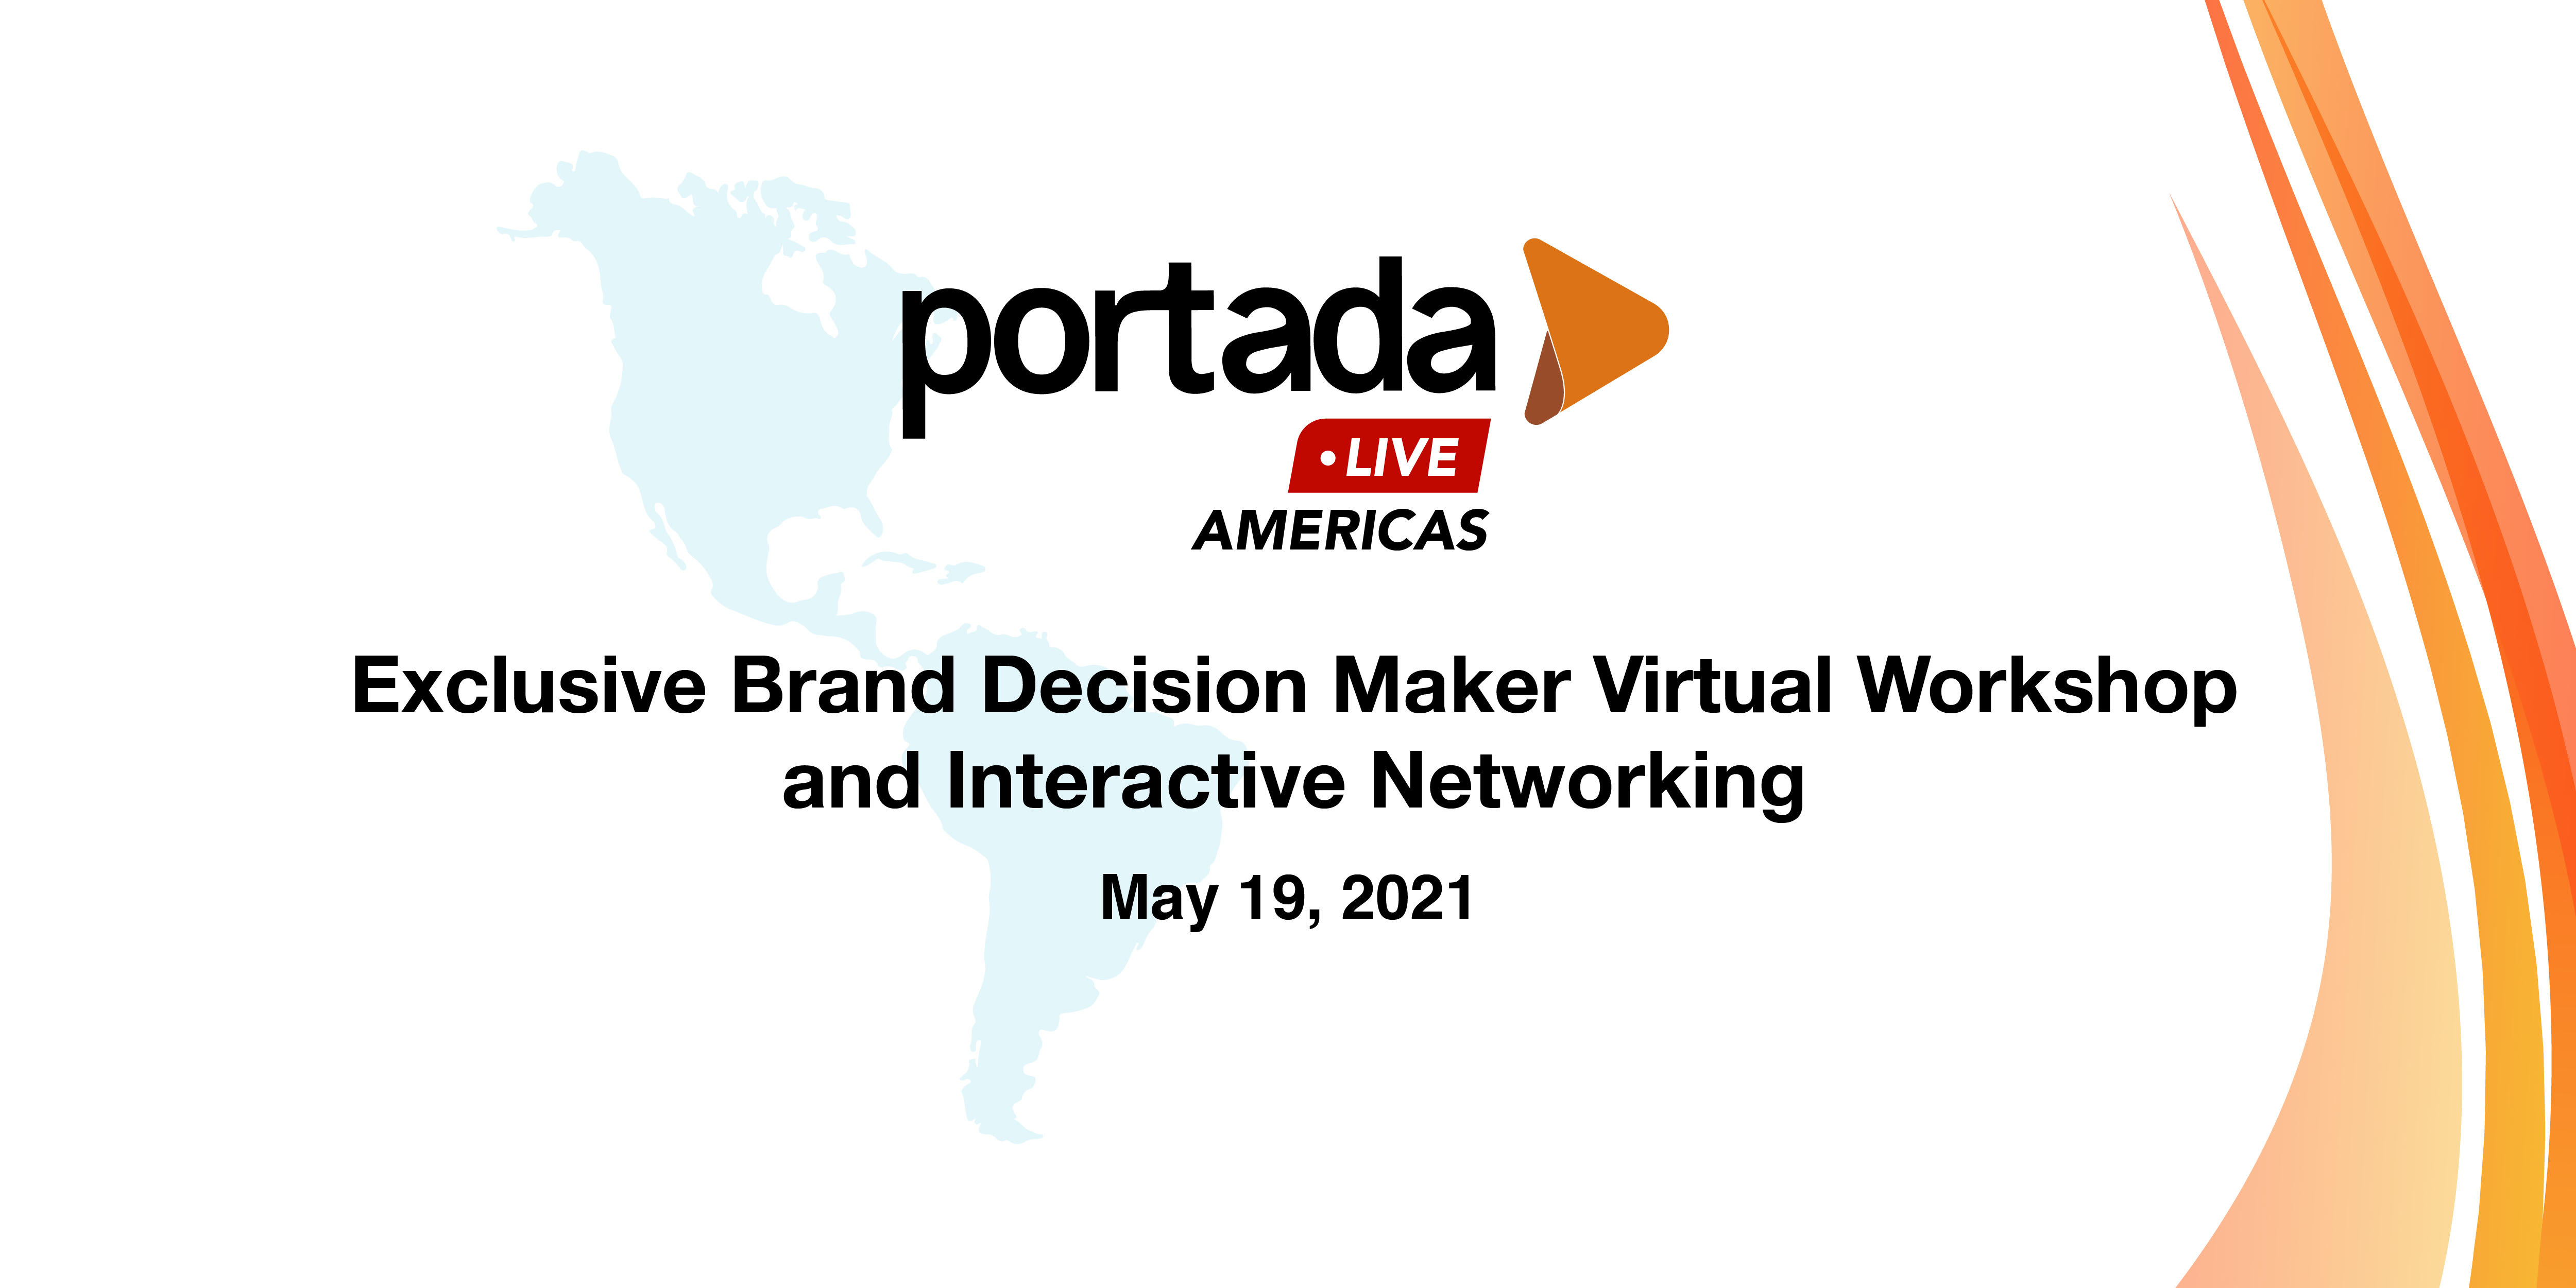 Portada Live Americas, May 19, 2021